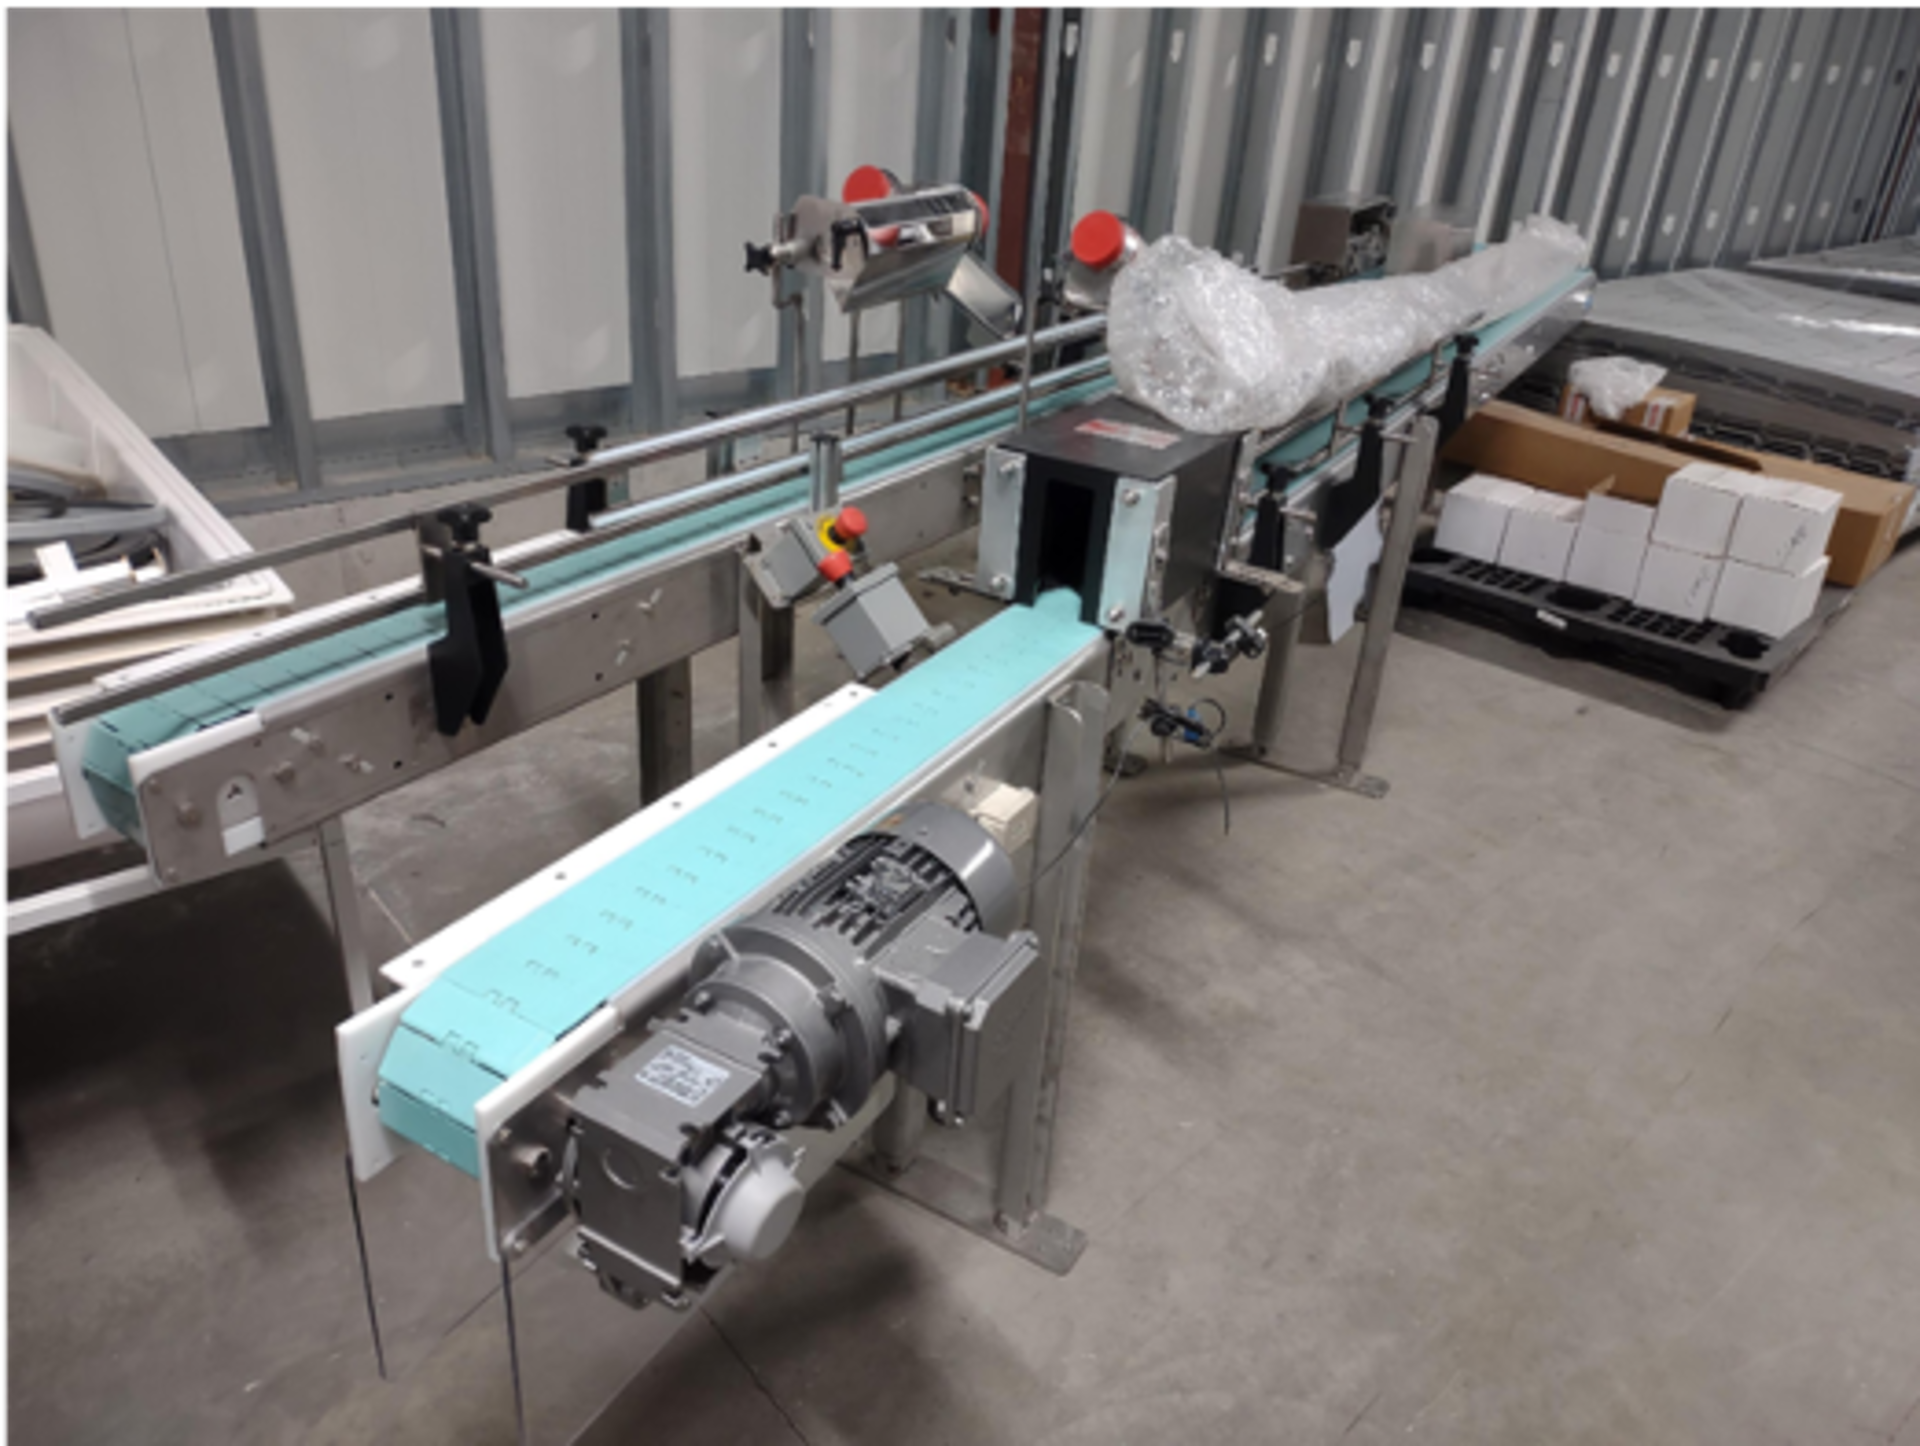 (Located in Evart, MI) TriPack Beverage Line Conveyor Sterilizer Assembly (2 Conveyors, 1